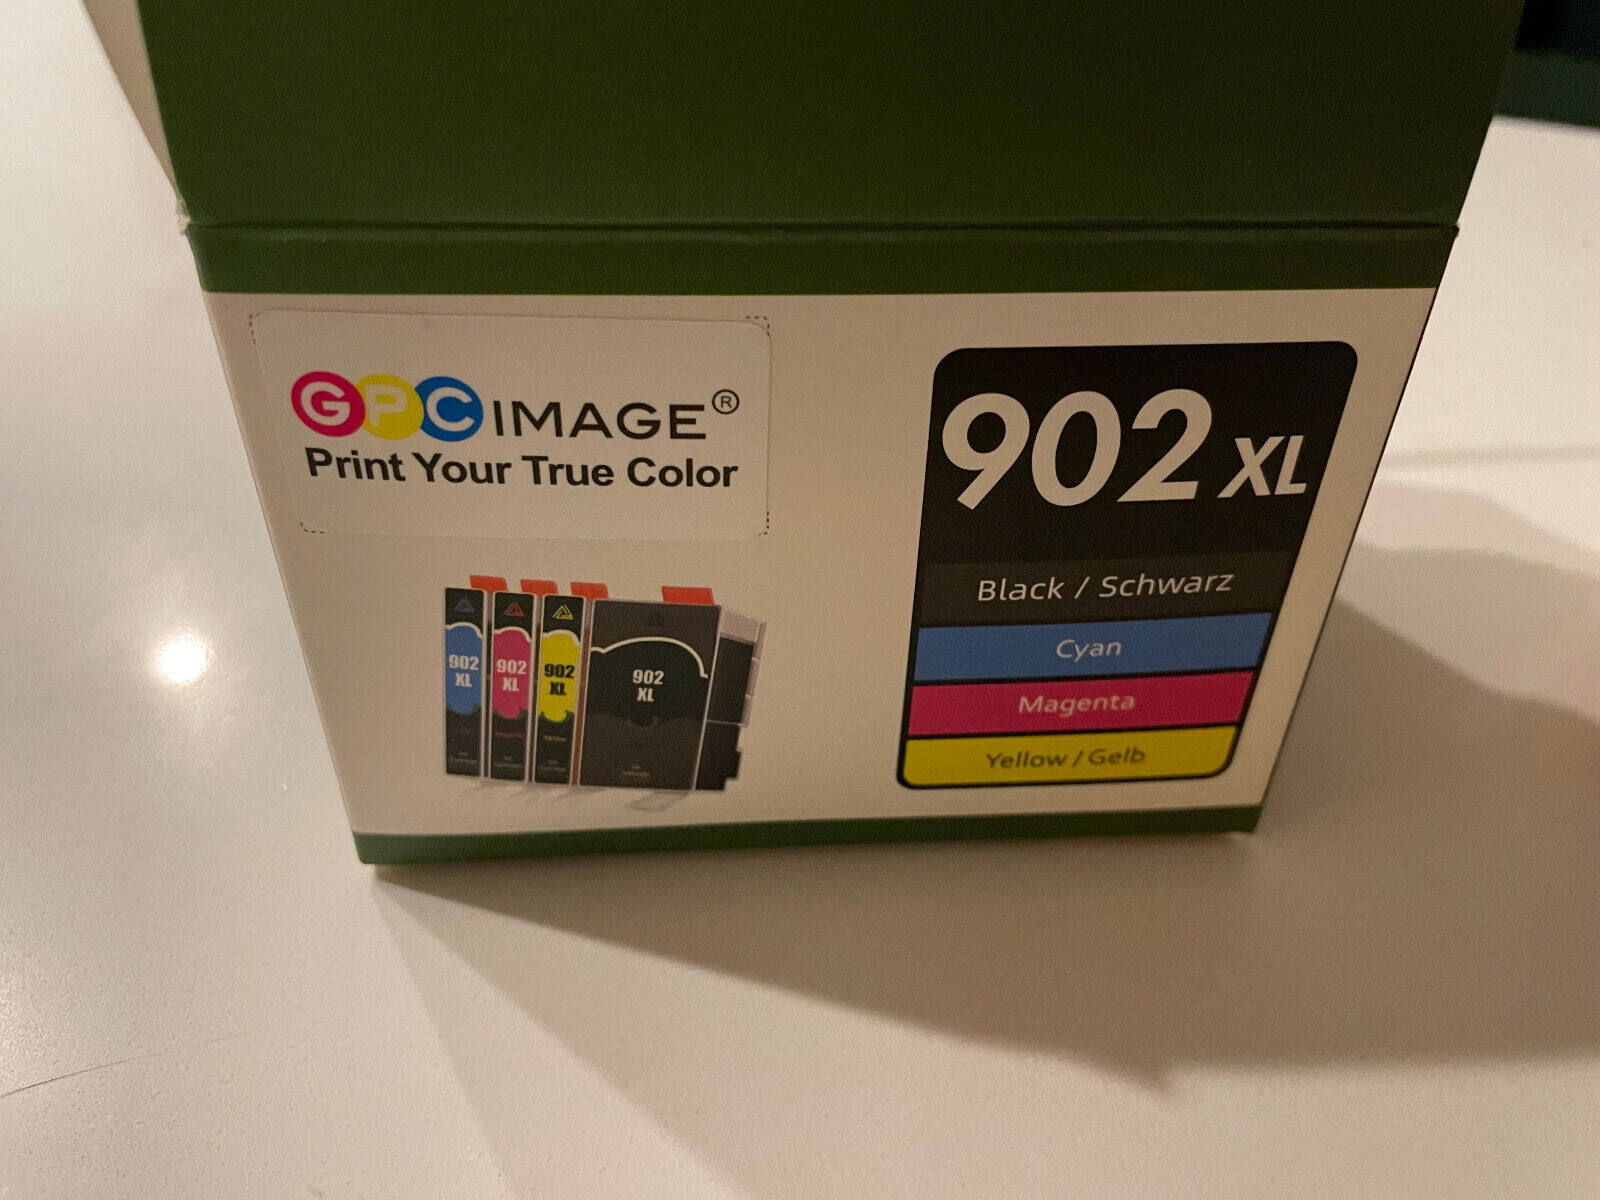 4-Pack 902XL Fits HP Three Colors Plus Black in Original Box GPC Image Toner